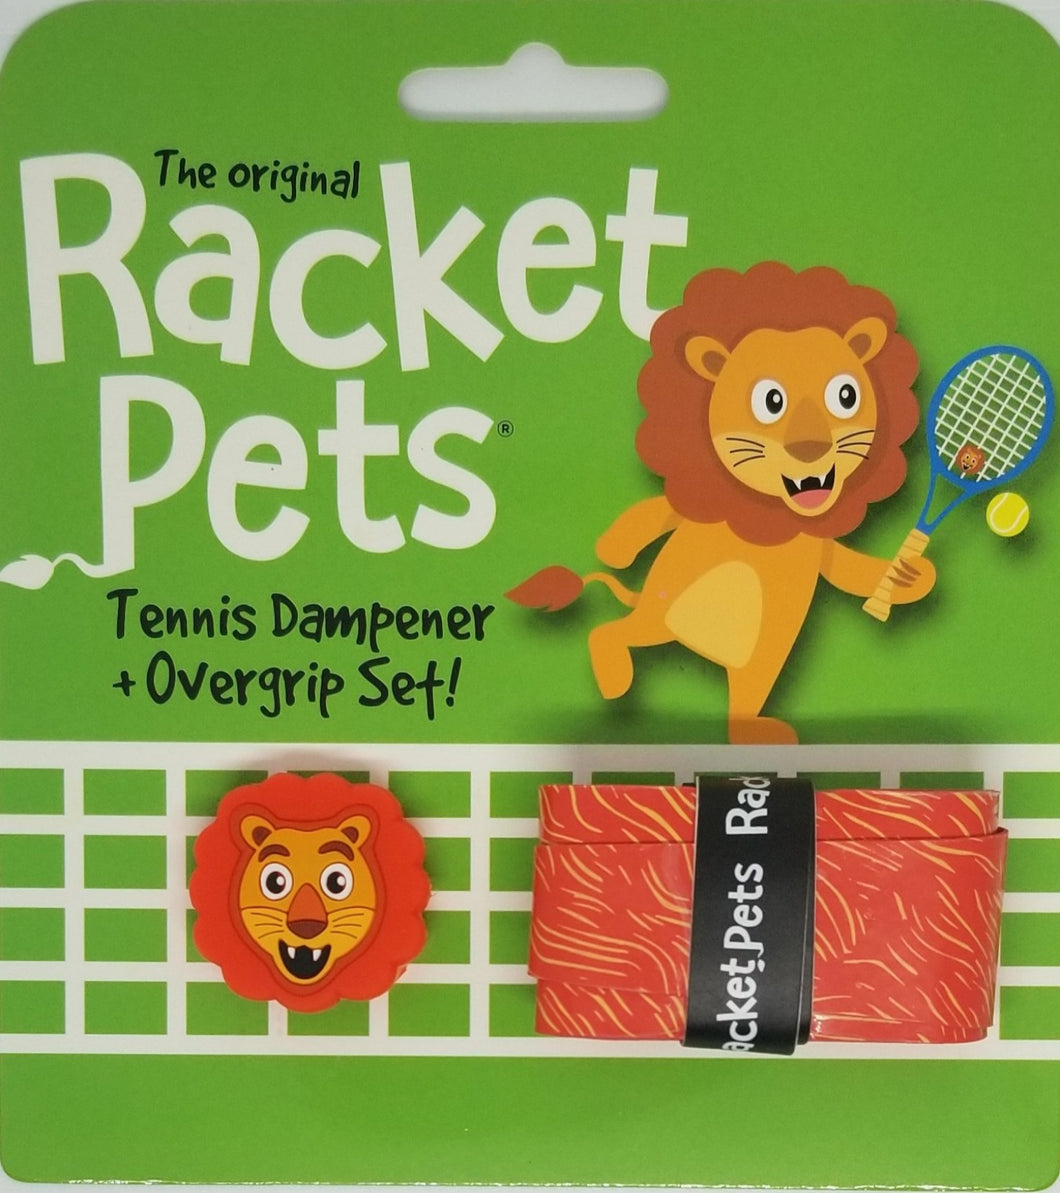 Orange Lion - tennis racket dampener shock absorber  overgrip animals